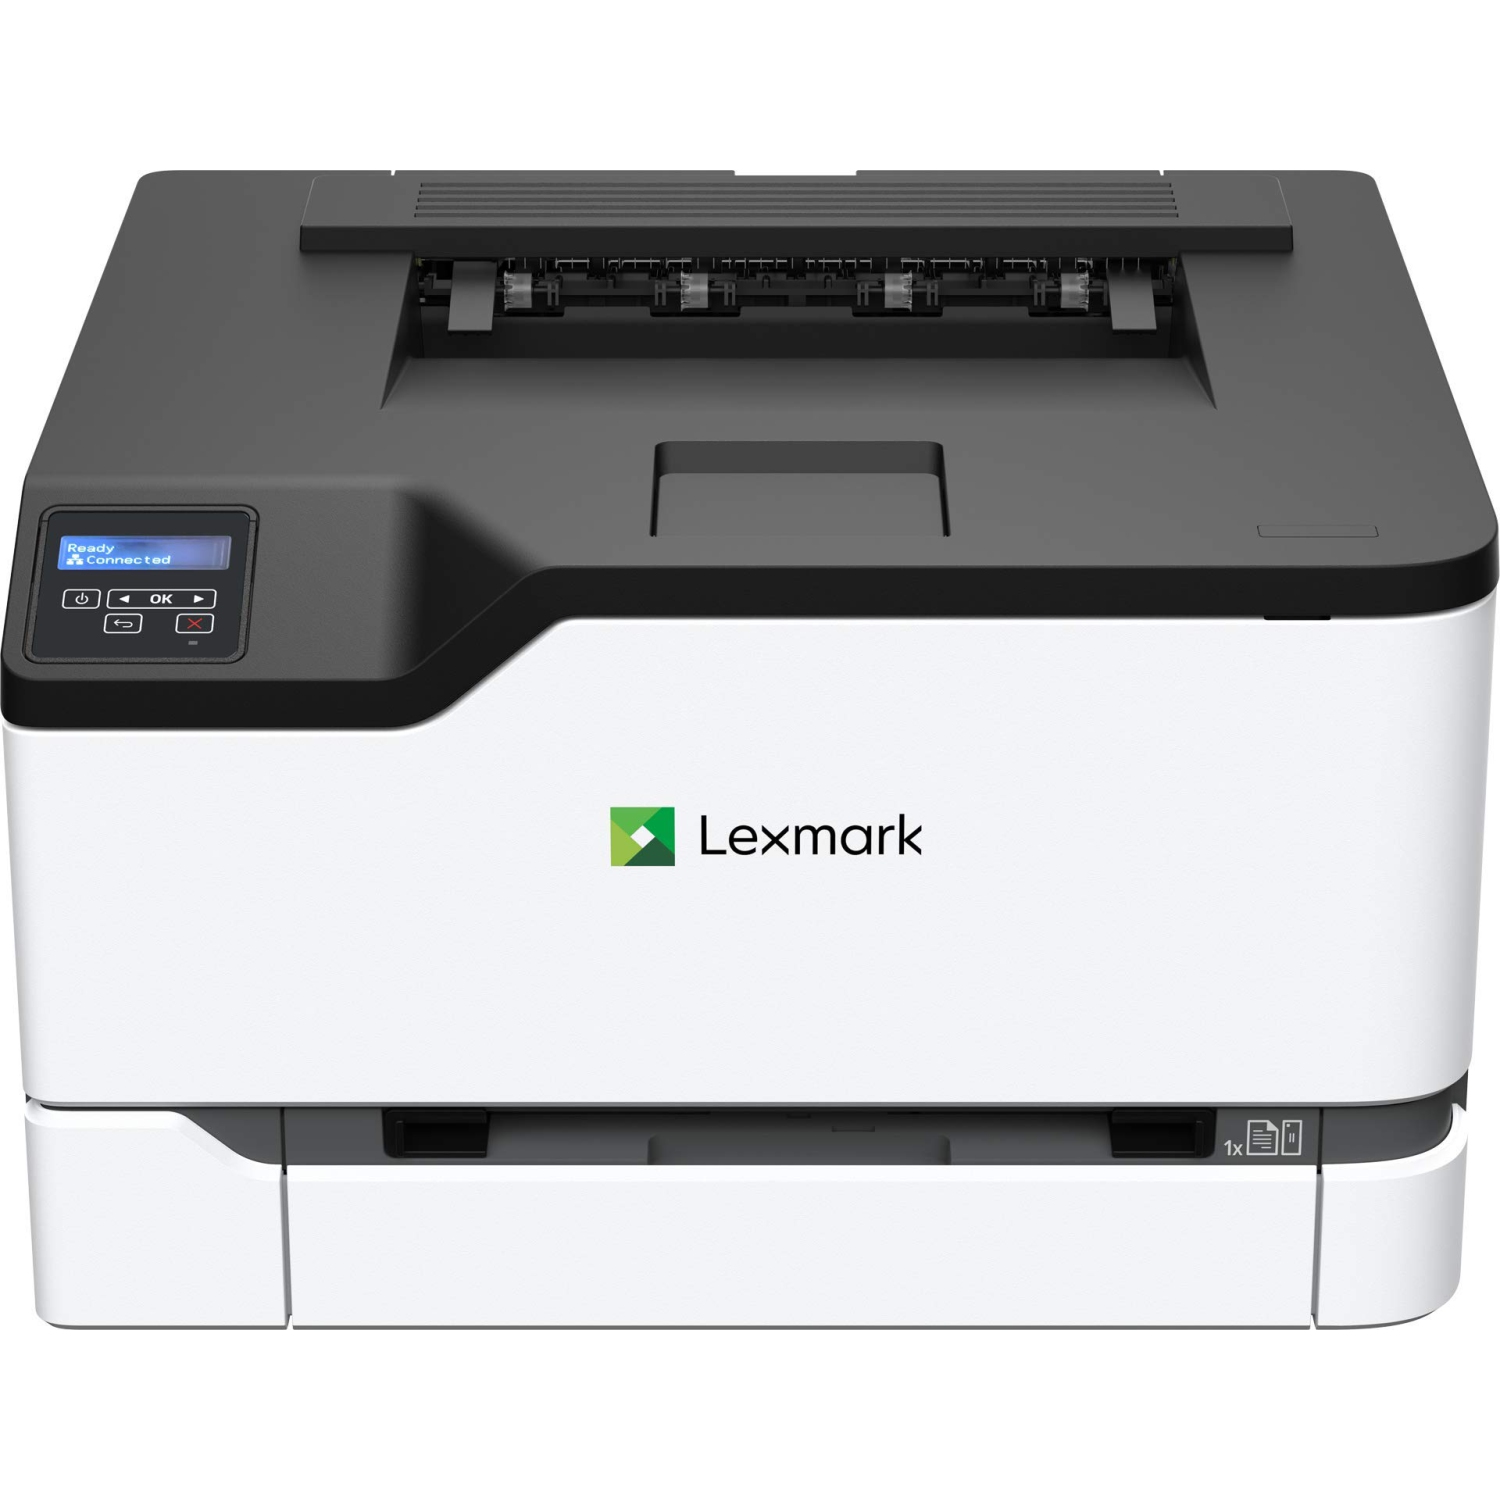 Lexmark C3224dw Wireless Laser Printer - Color